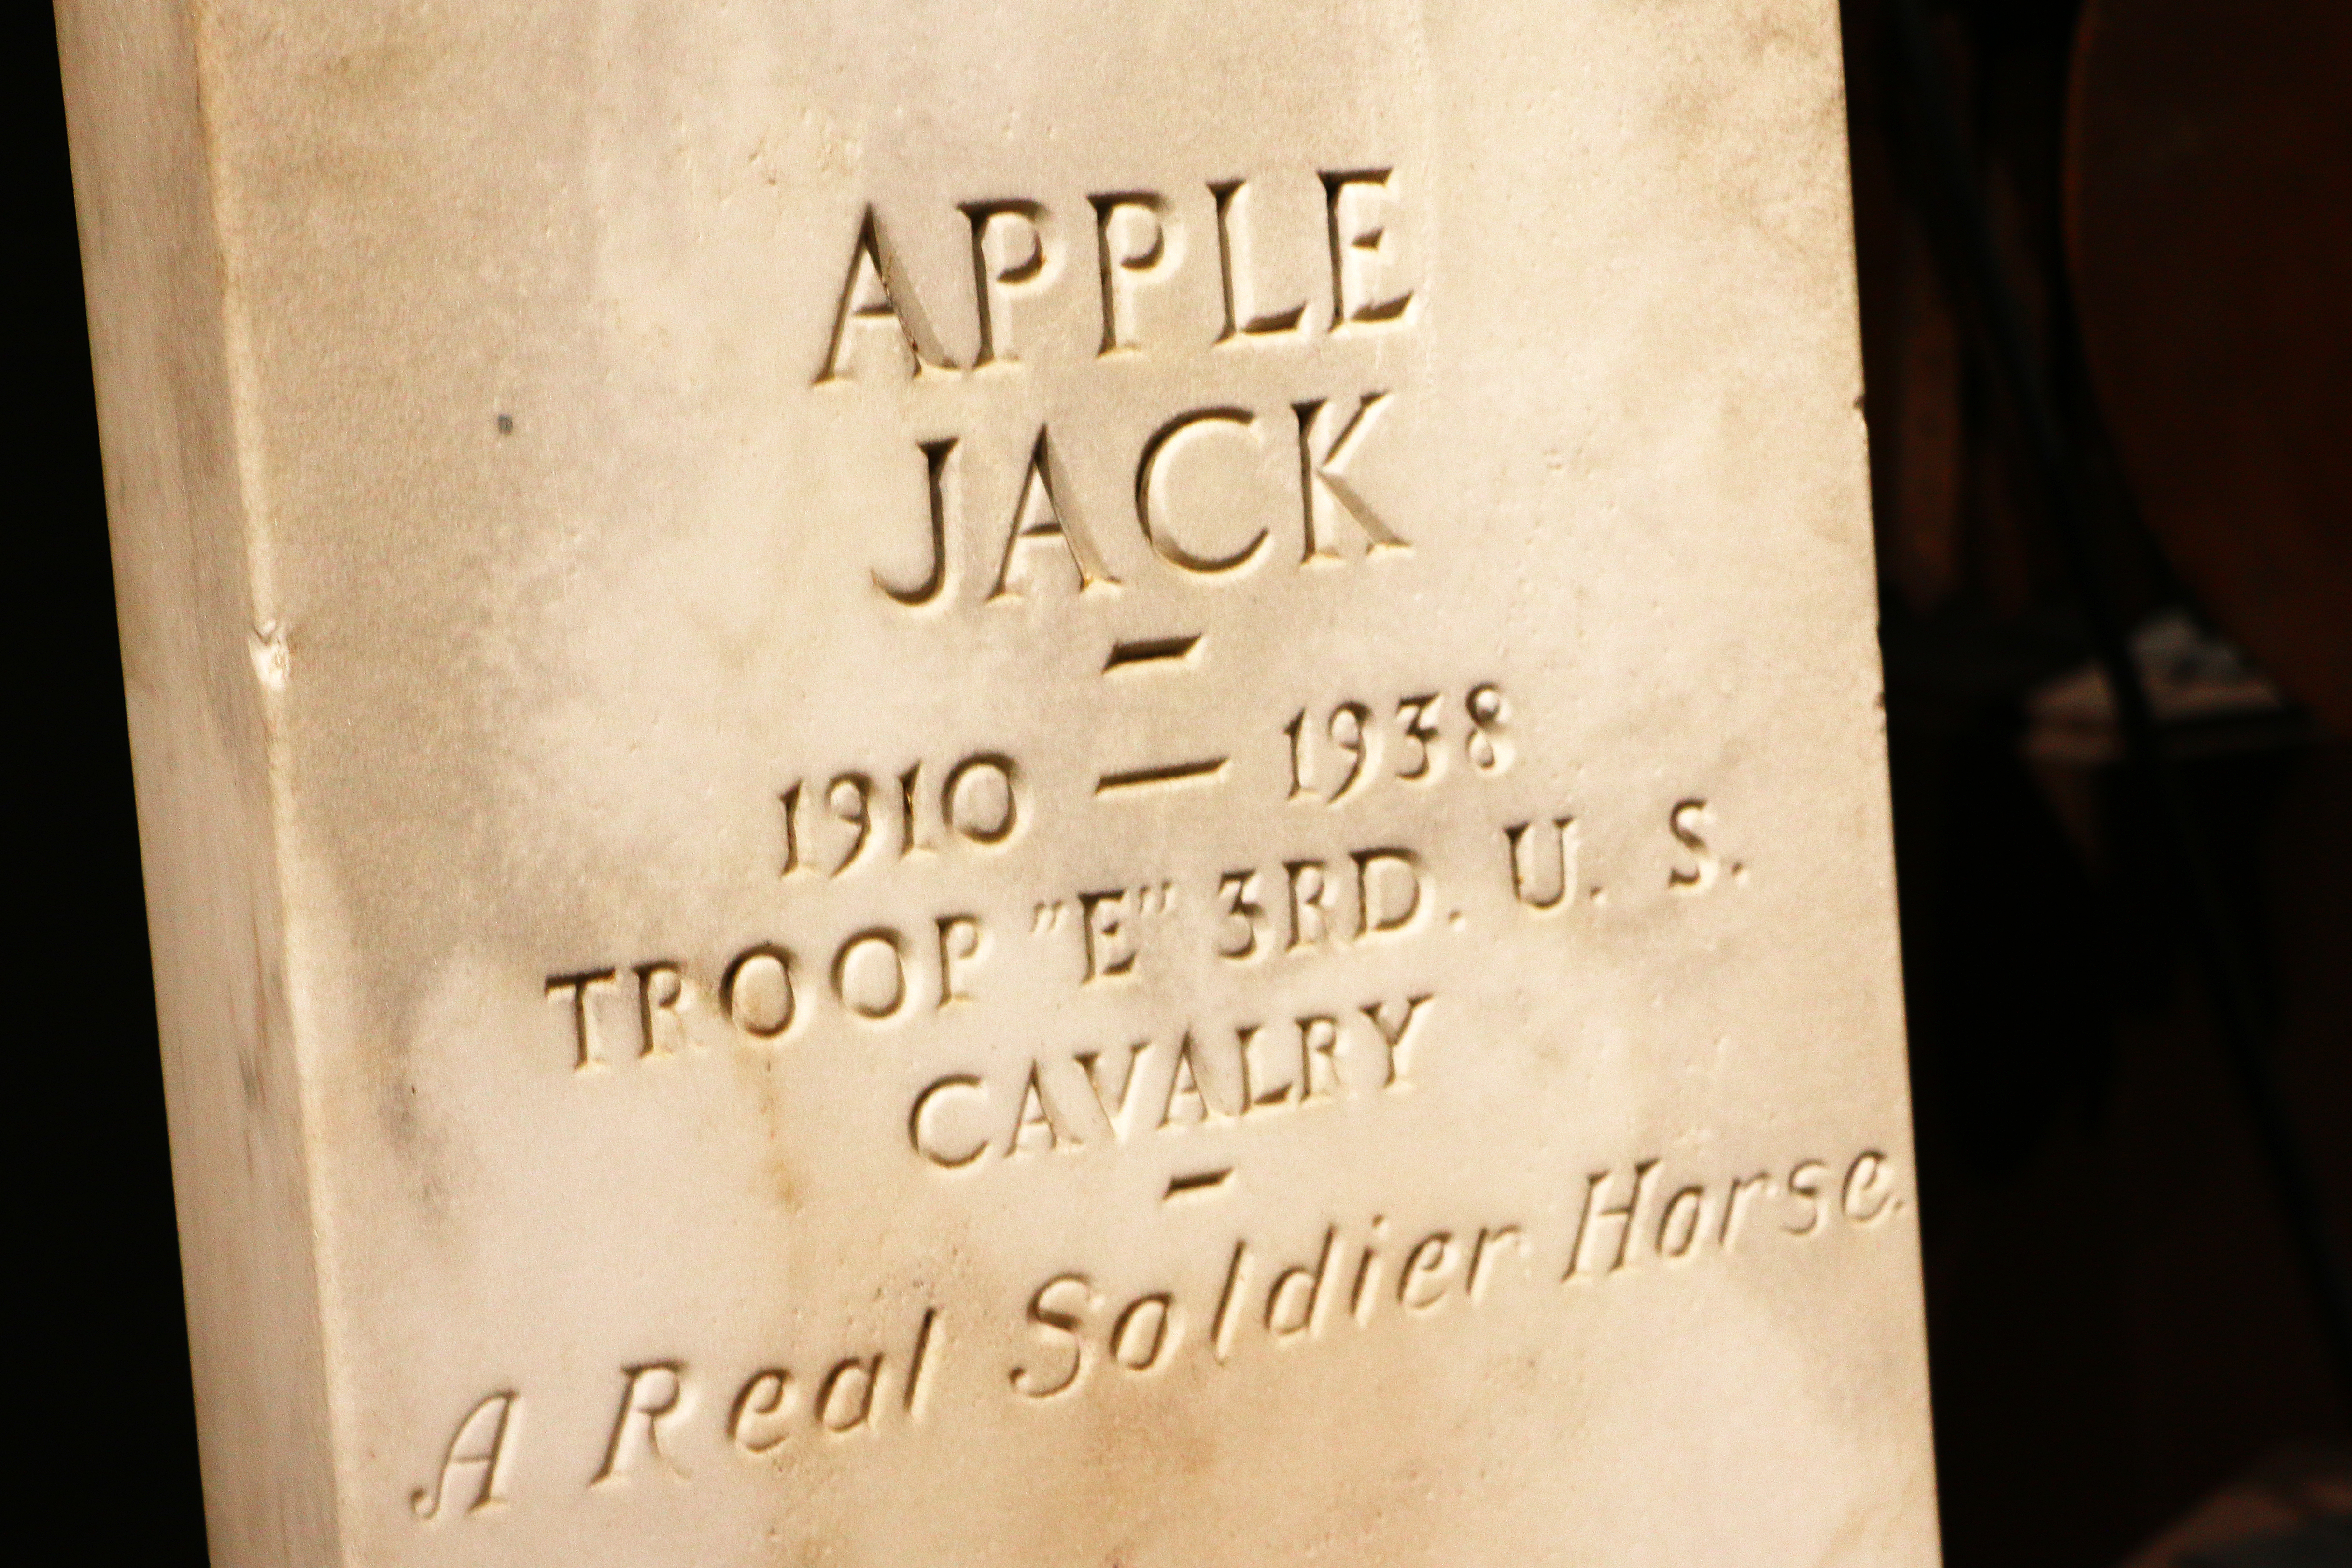 Apple Jack's Grave